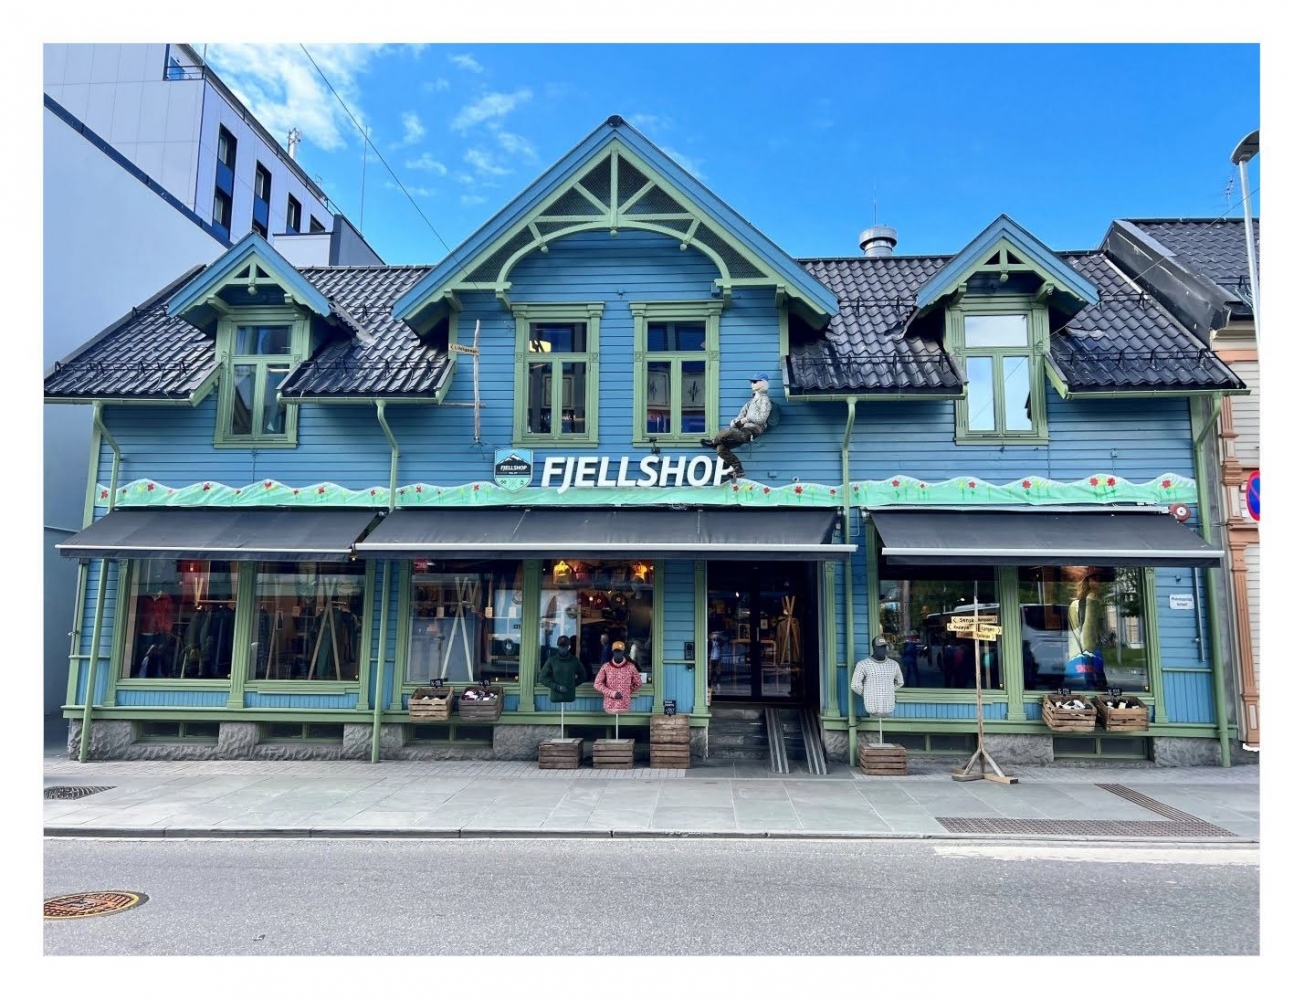 Fjellshop entrance with summer decorations